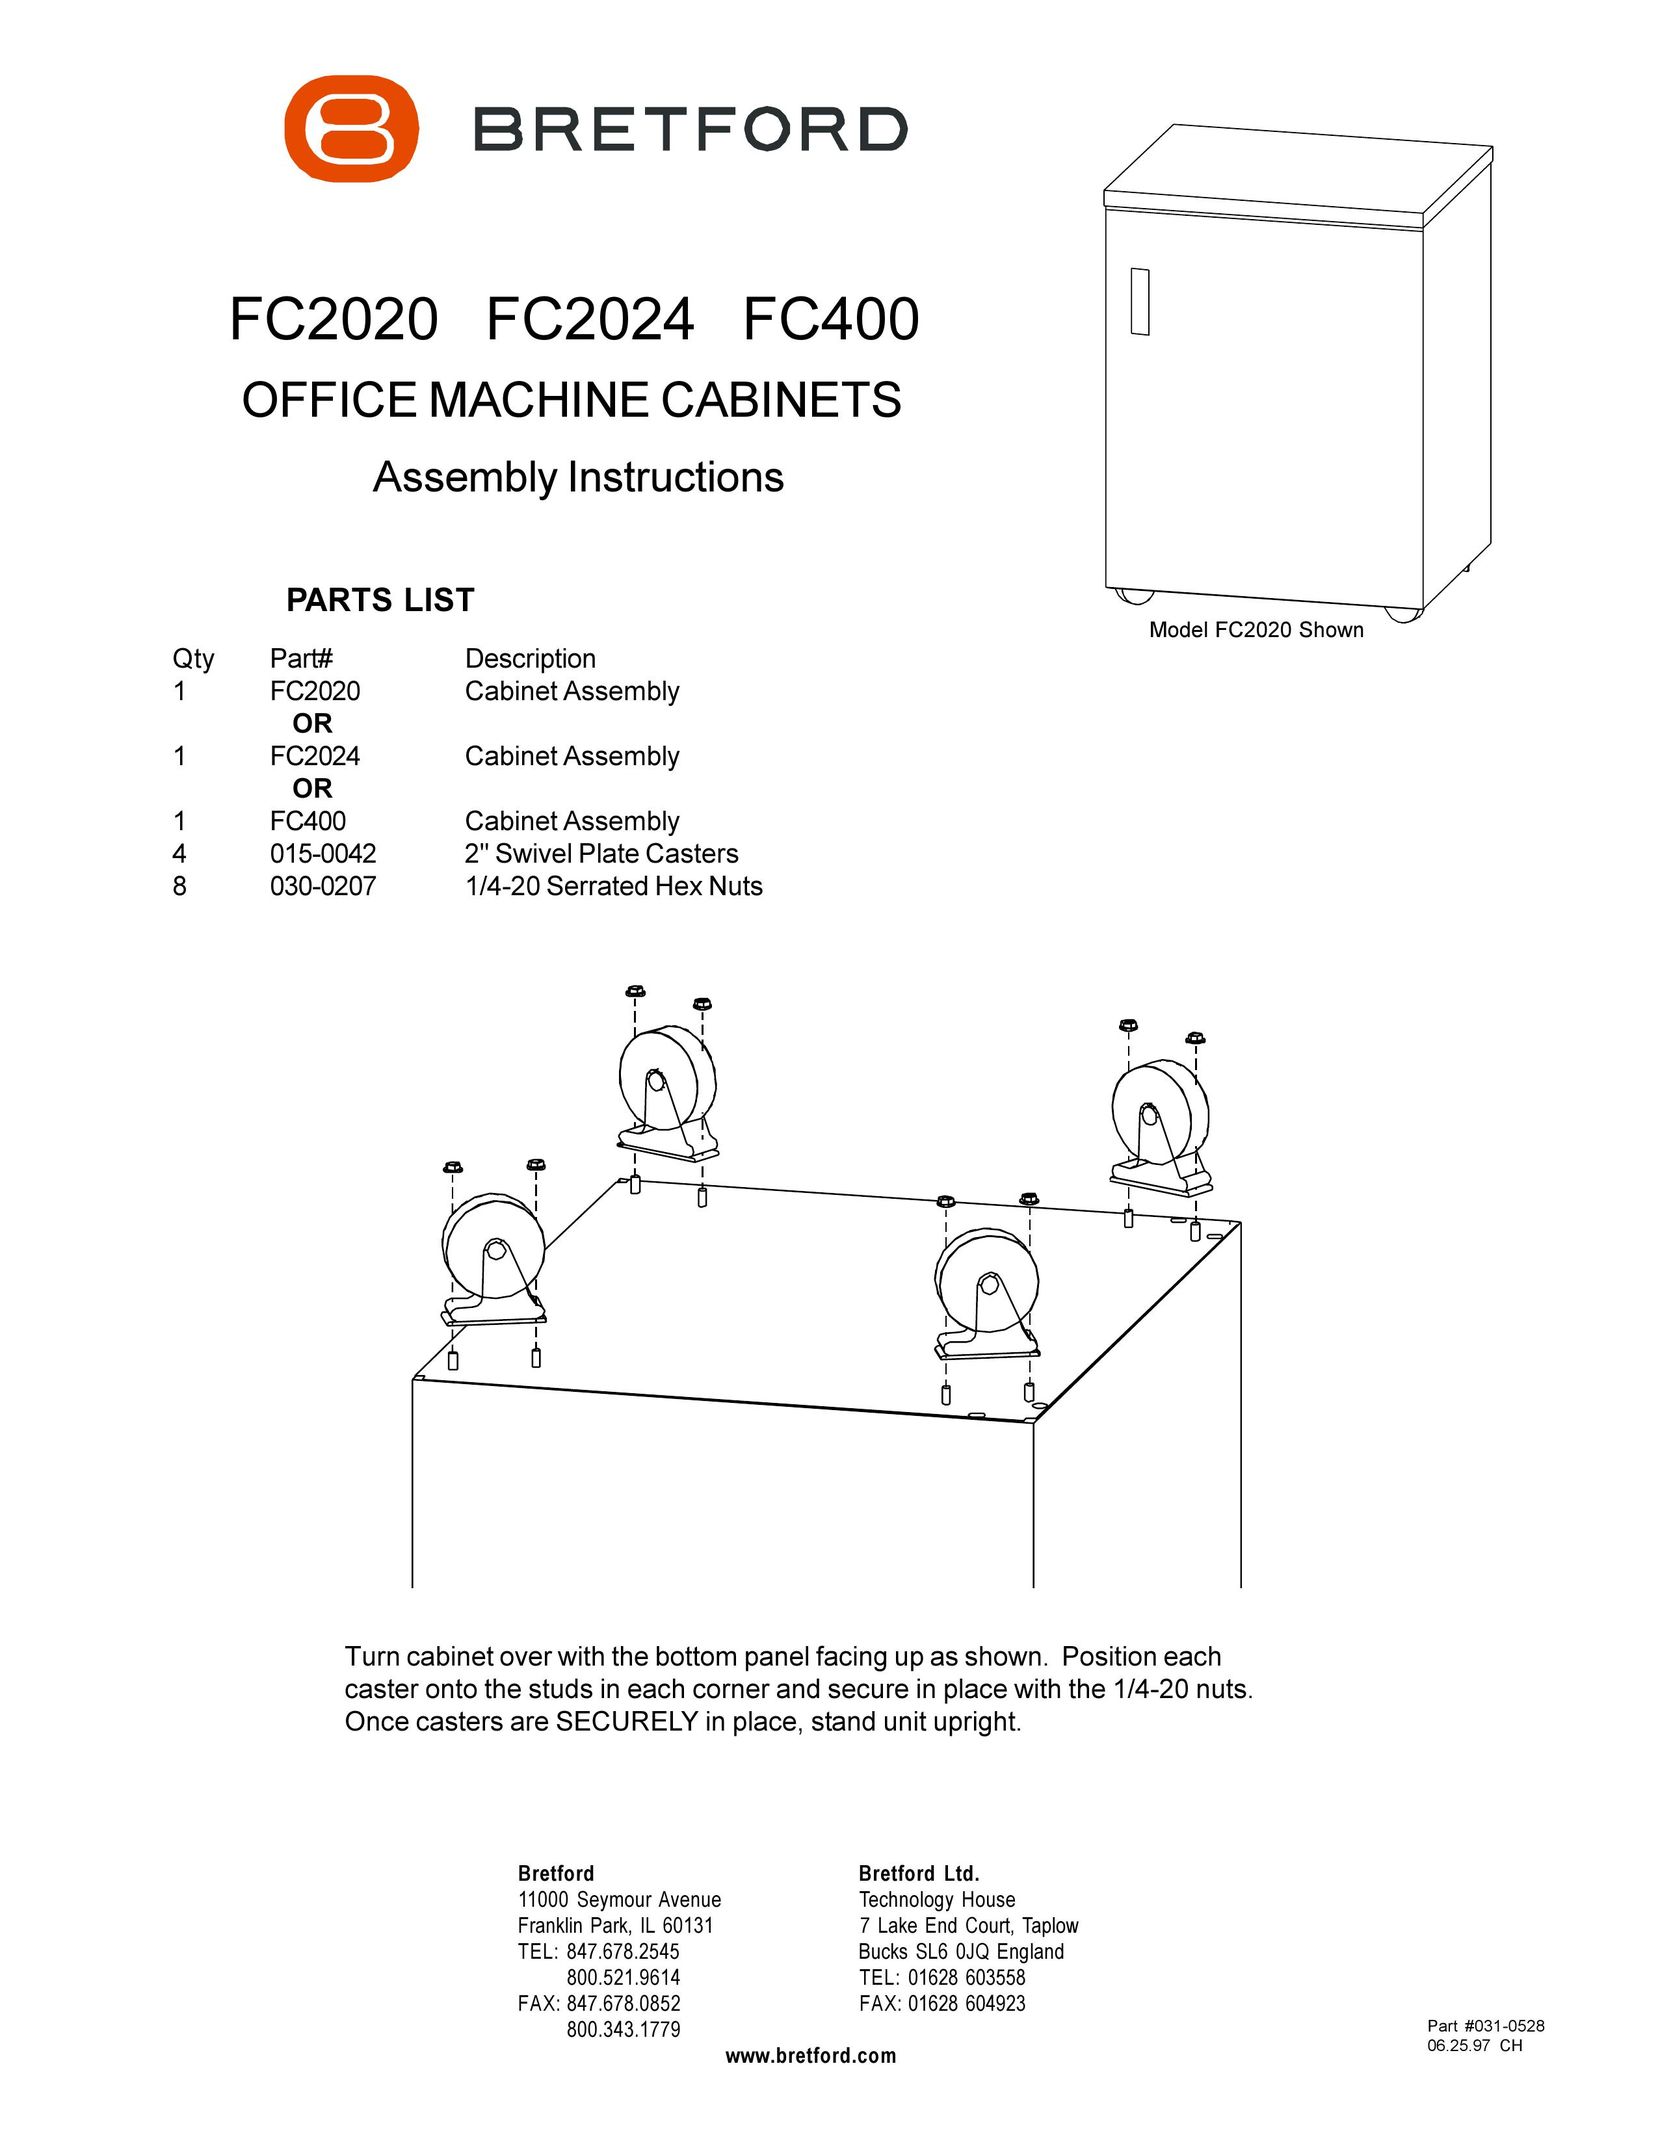 Bretford FC2020 Tool Storage User Manual